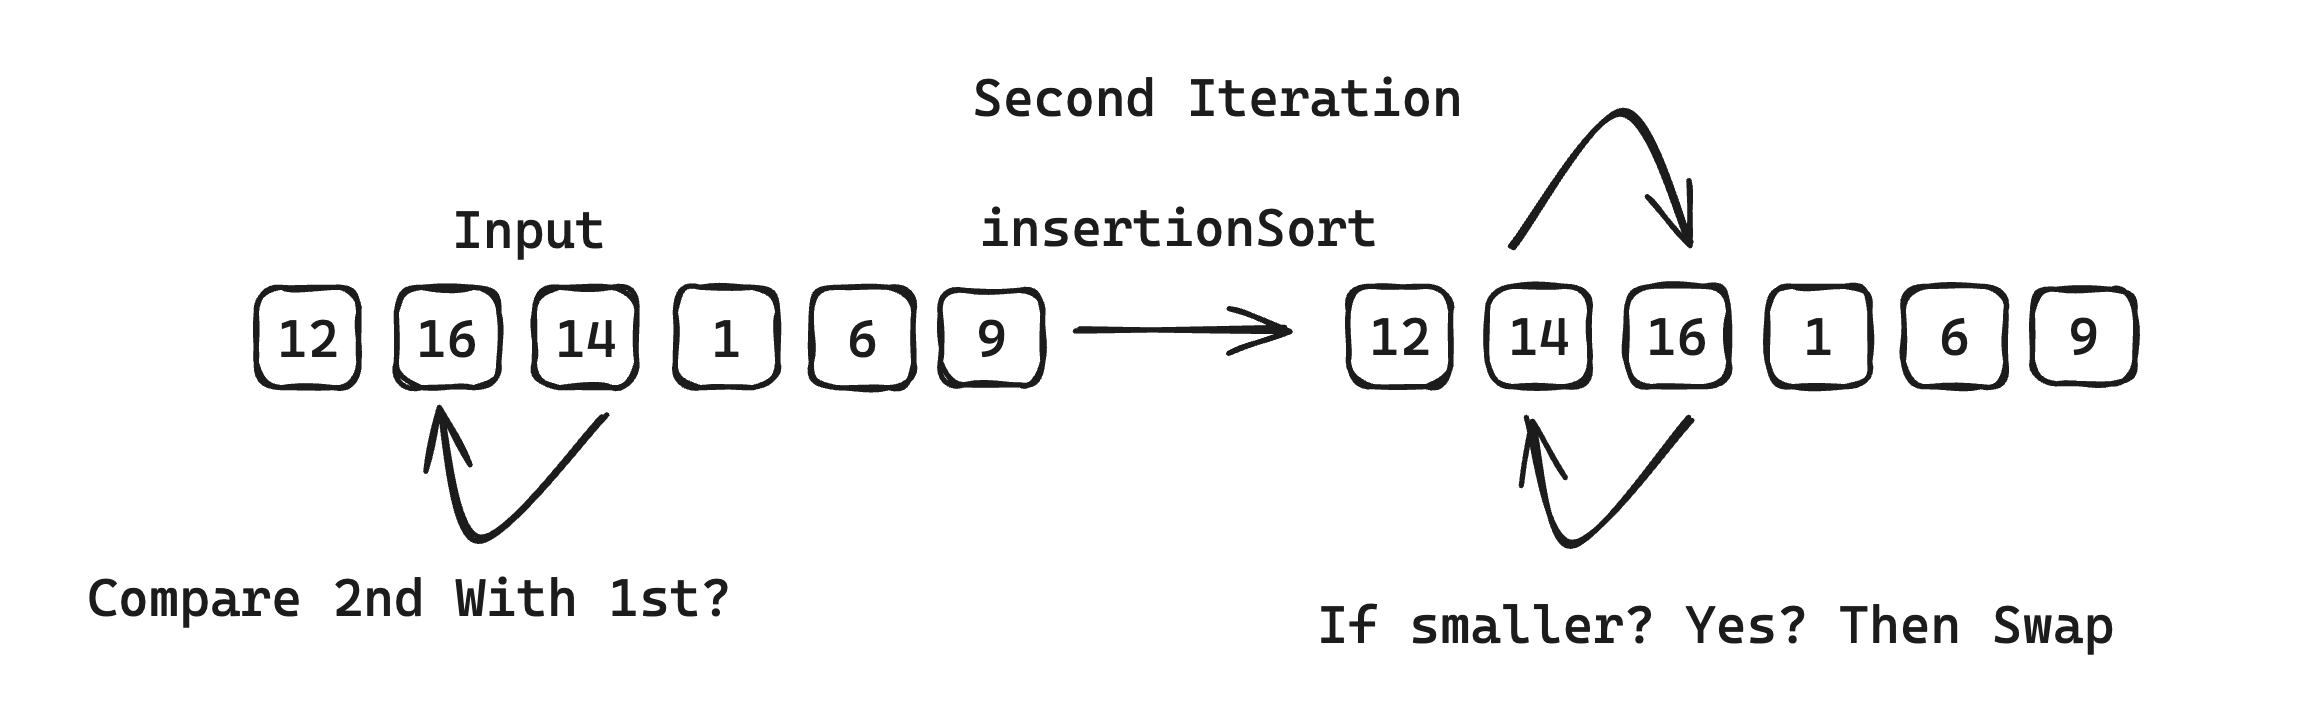 Insertion Sort Second Iteration